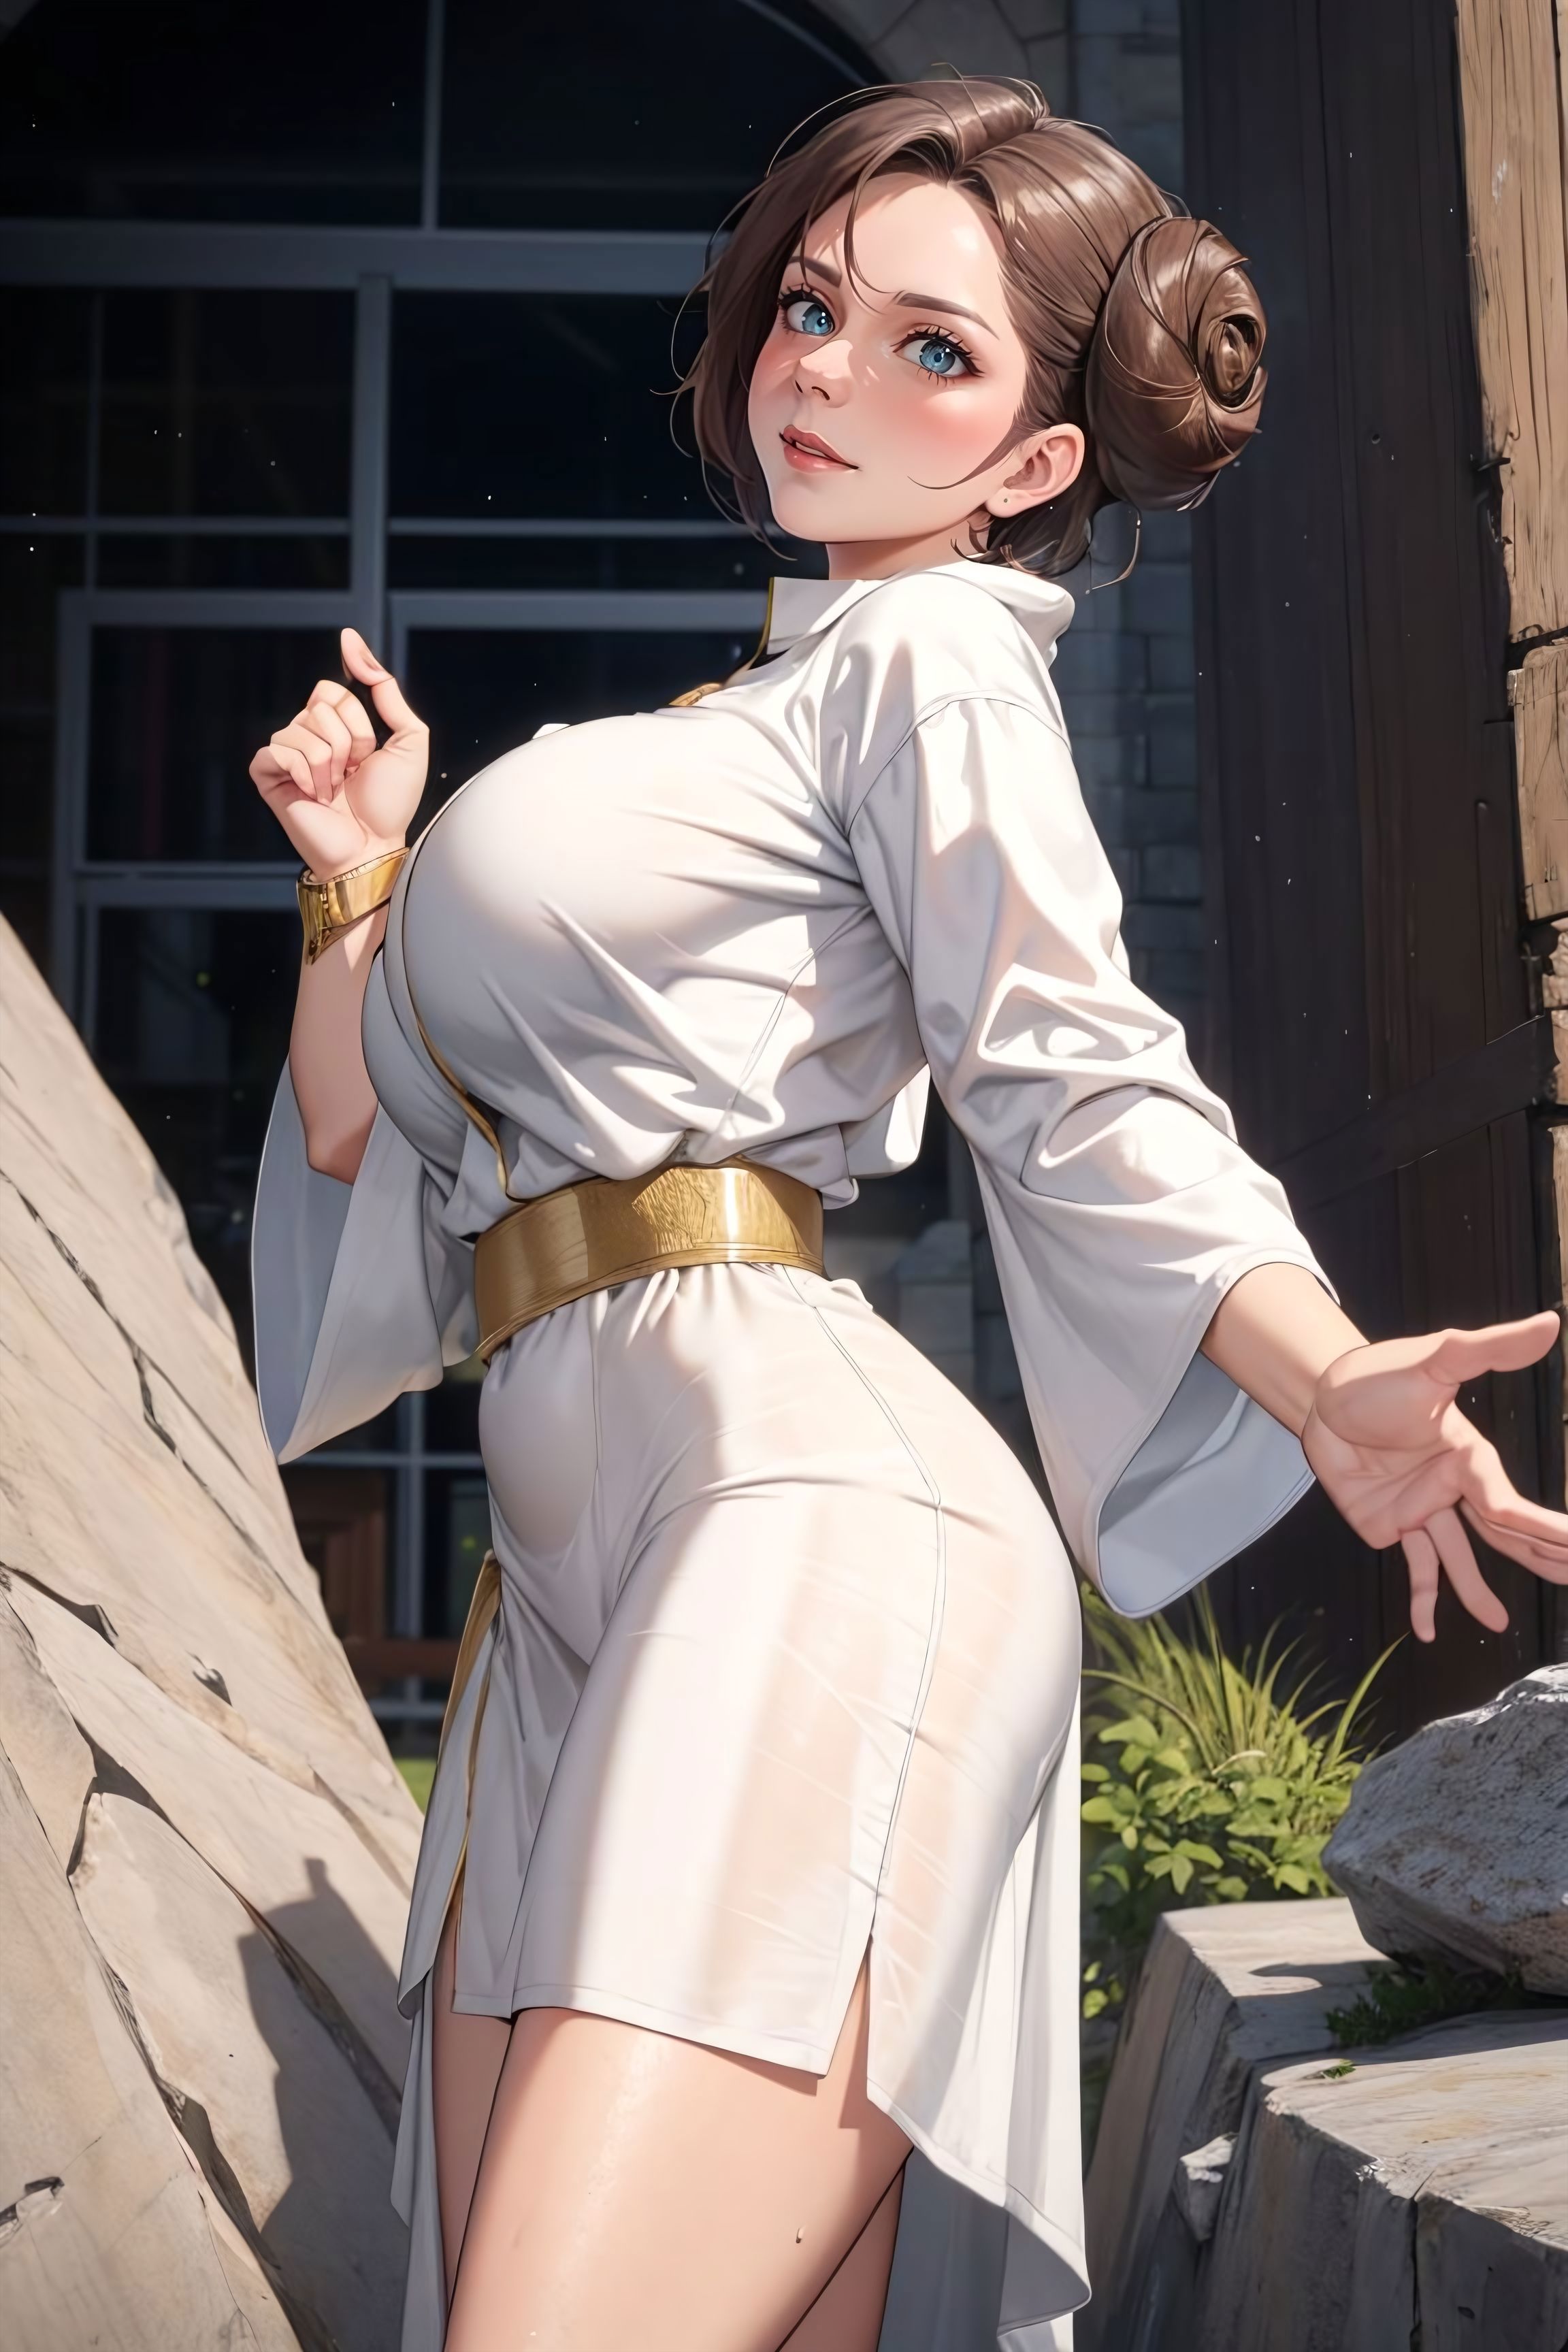 Princess Leia Organa (Star Wars) image by AsuraAI